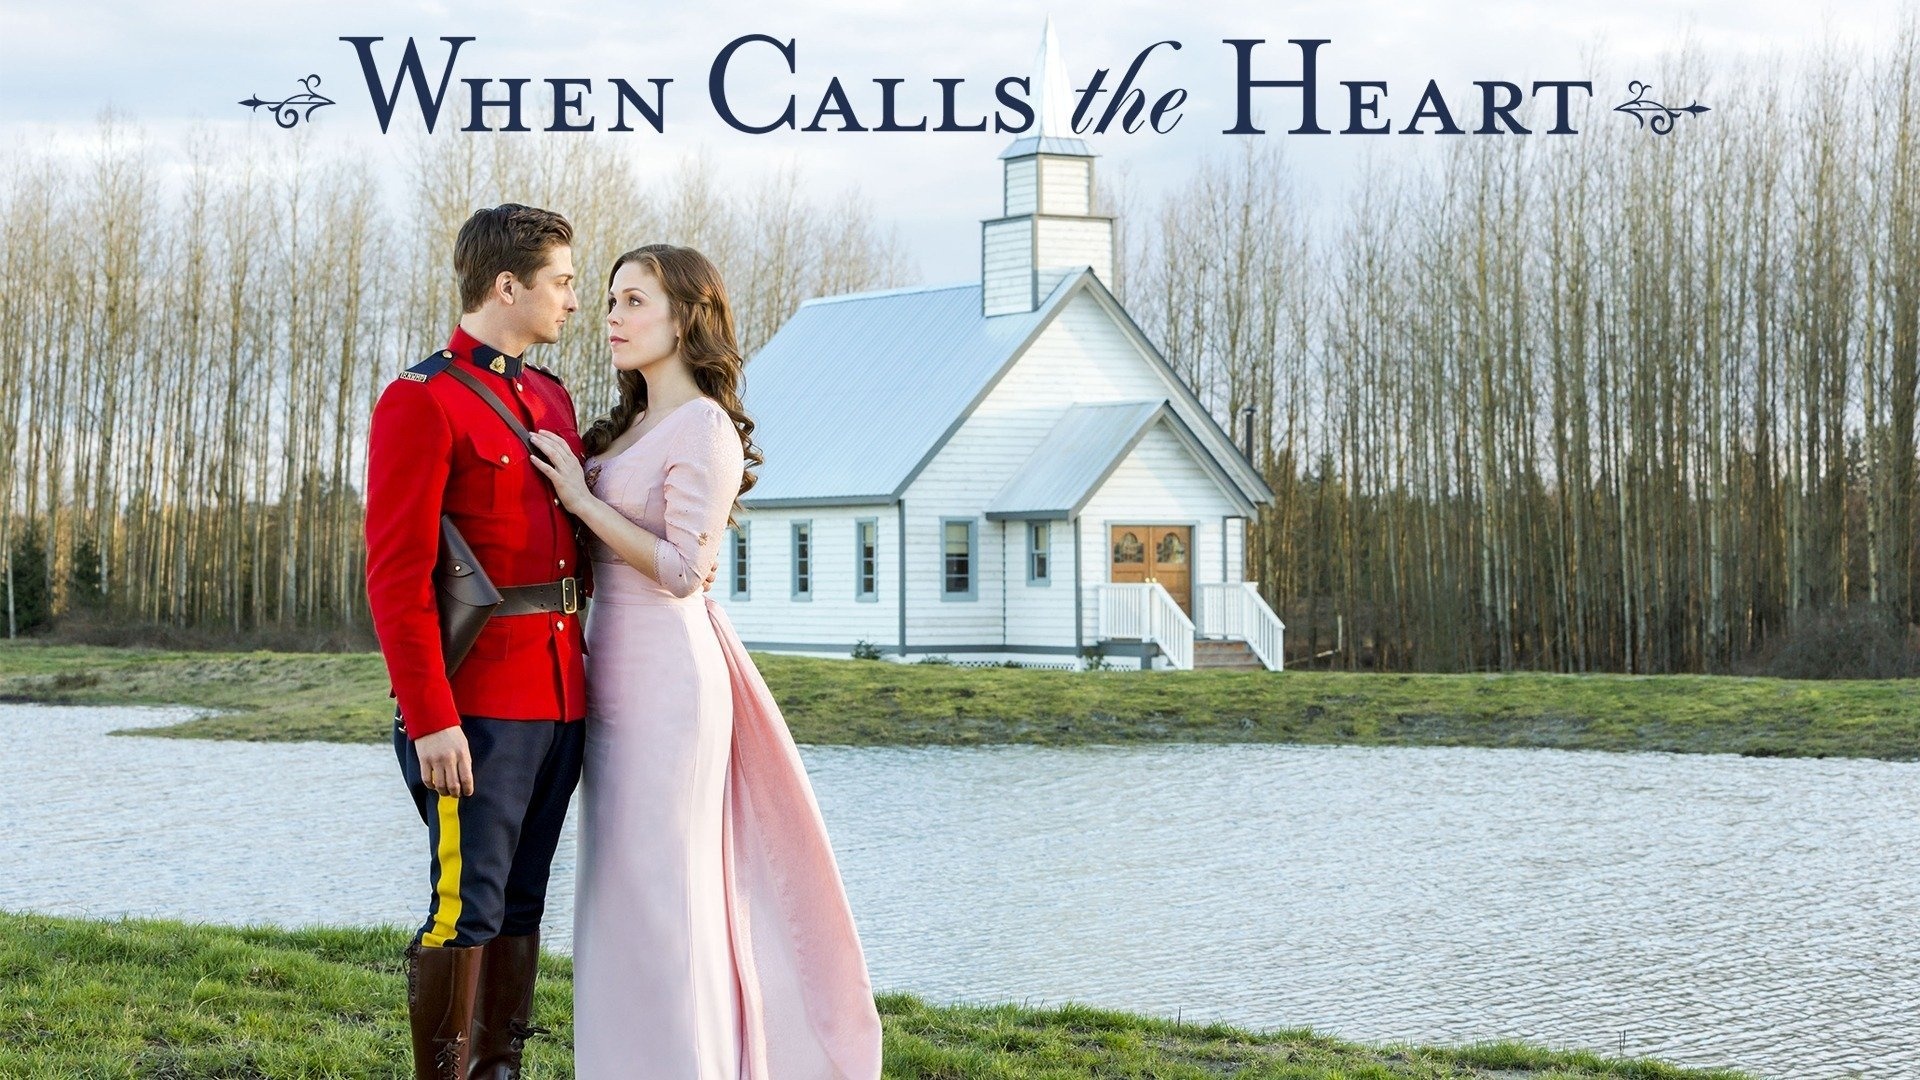 When Calls the Heart Season 2 - Watch Full Episodes Online - Plex 1920x1080